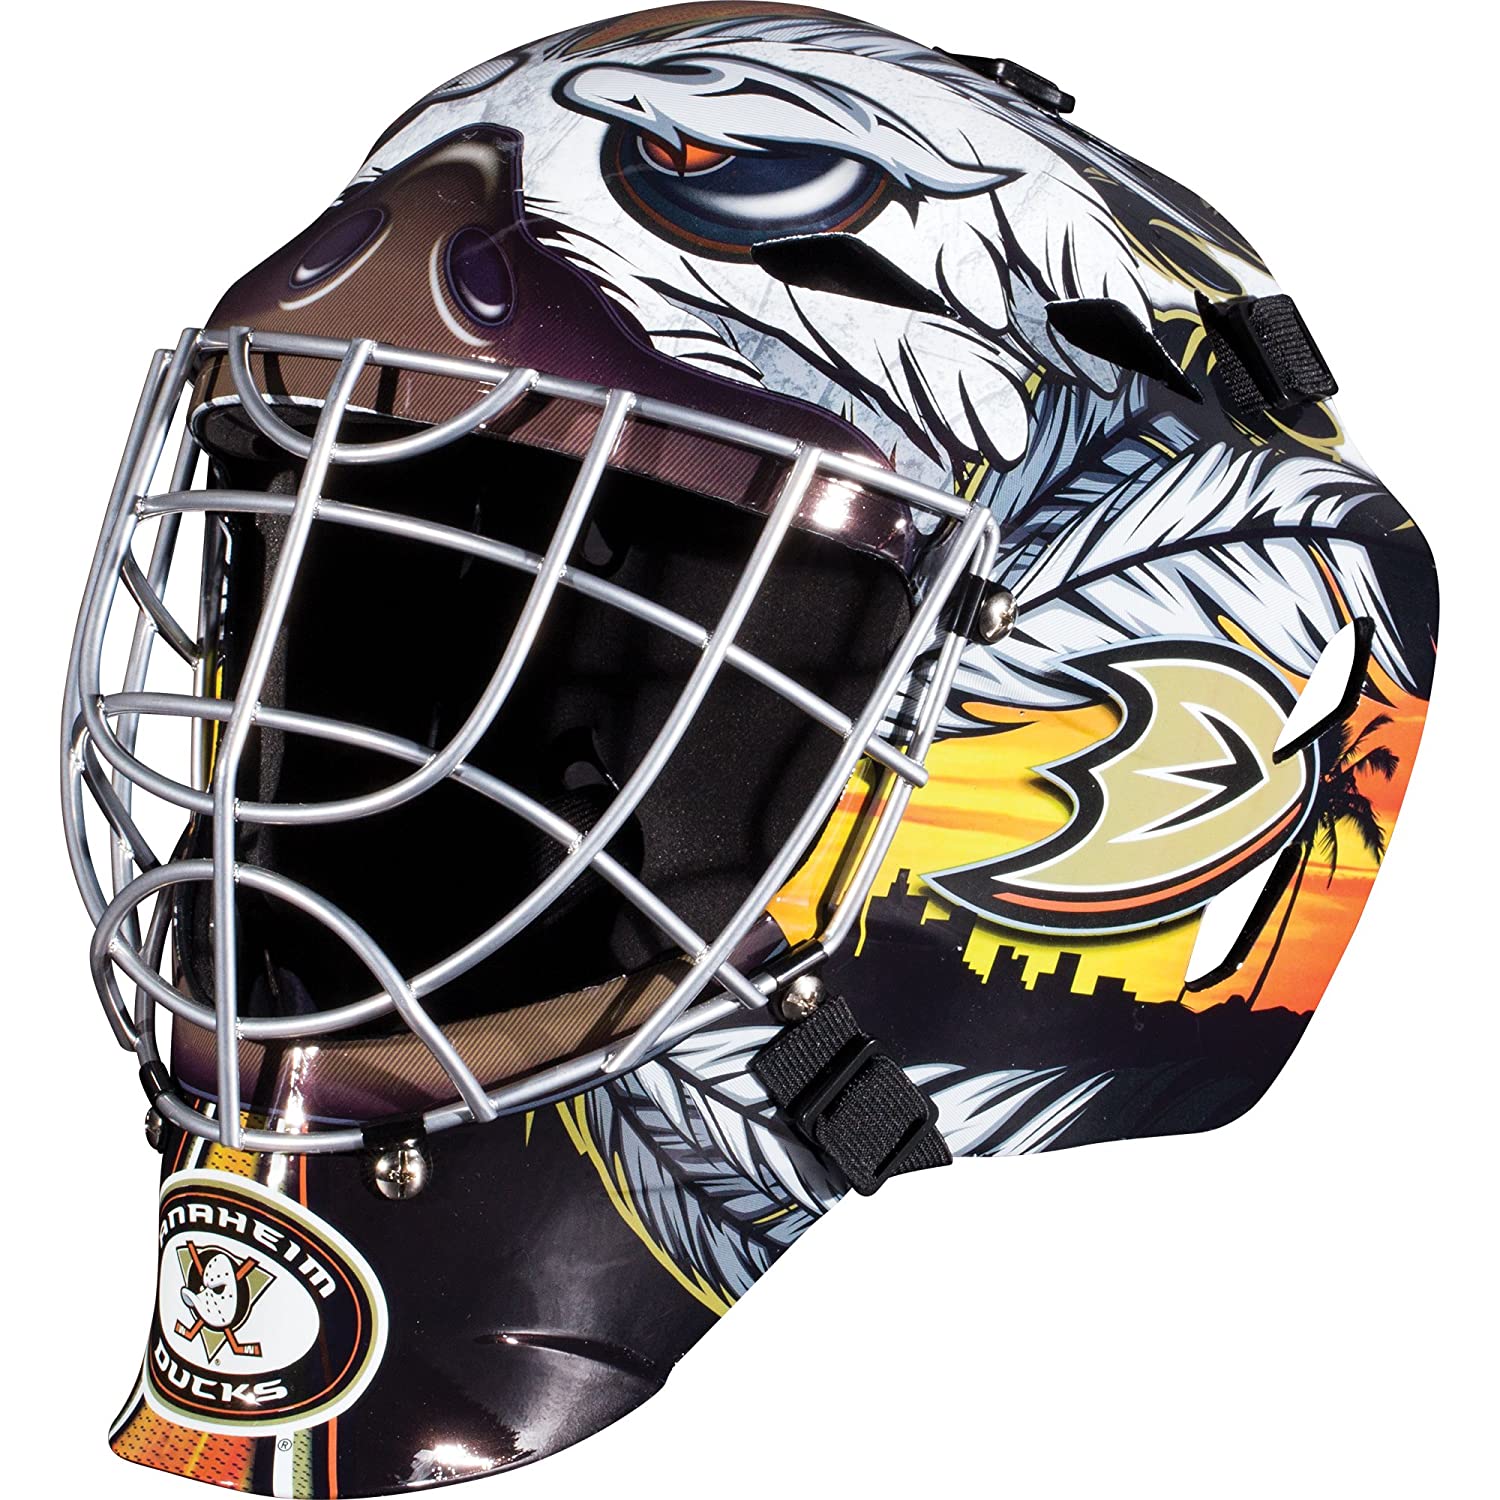 Franklin Sports GFM 1500 NHL Team Goalie Face Mask — Street Hockey Mask Modeled After U.S. and Canadian Hockey Teams